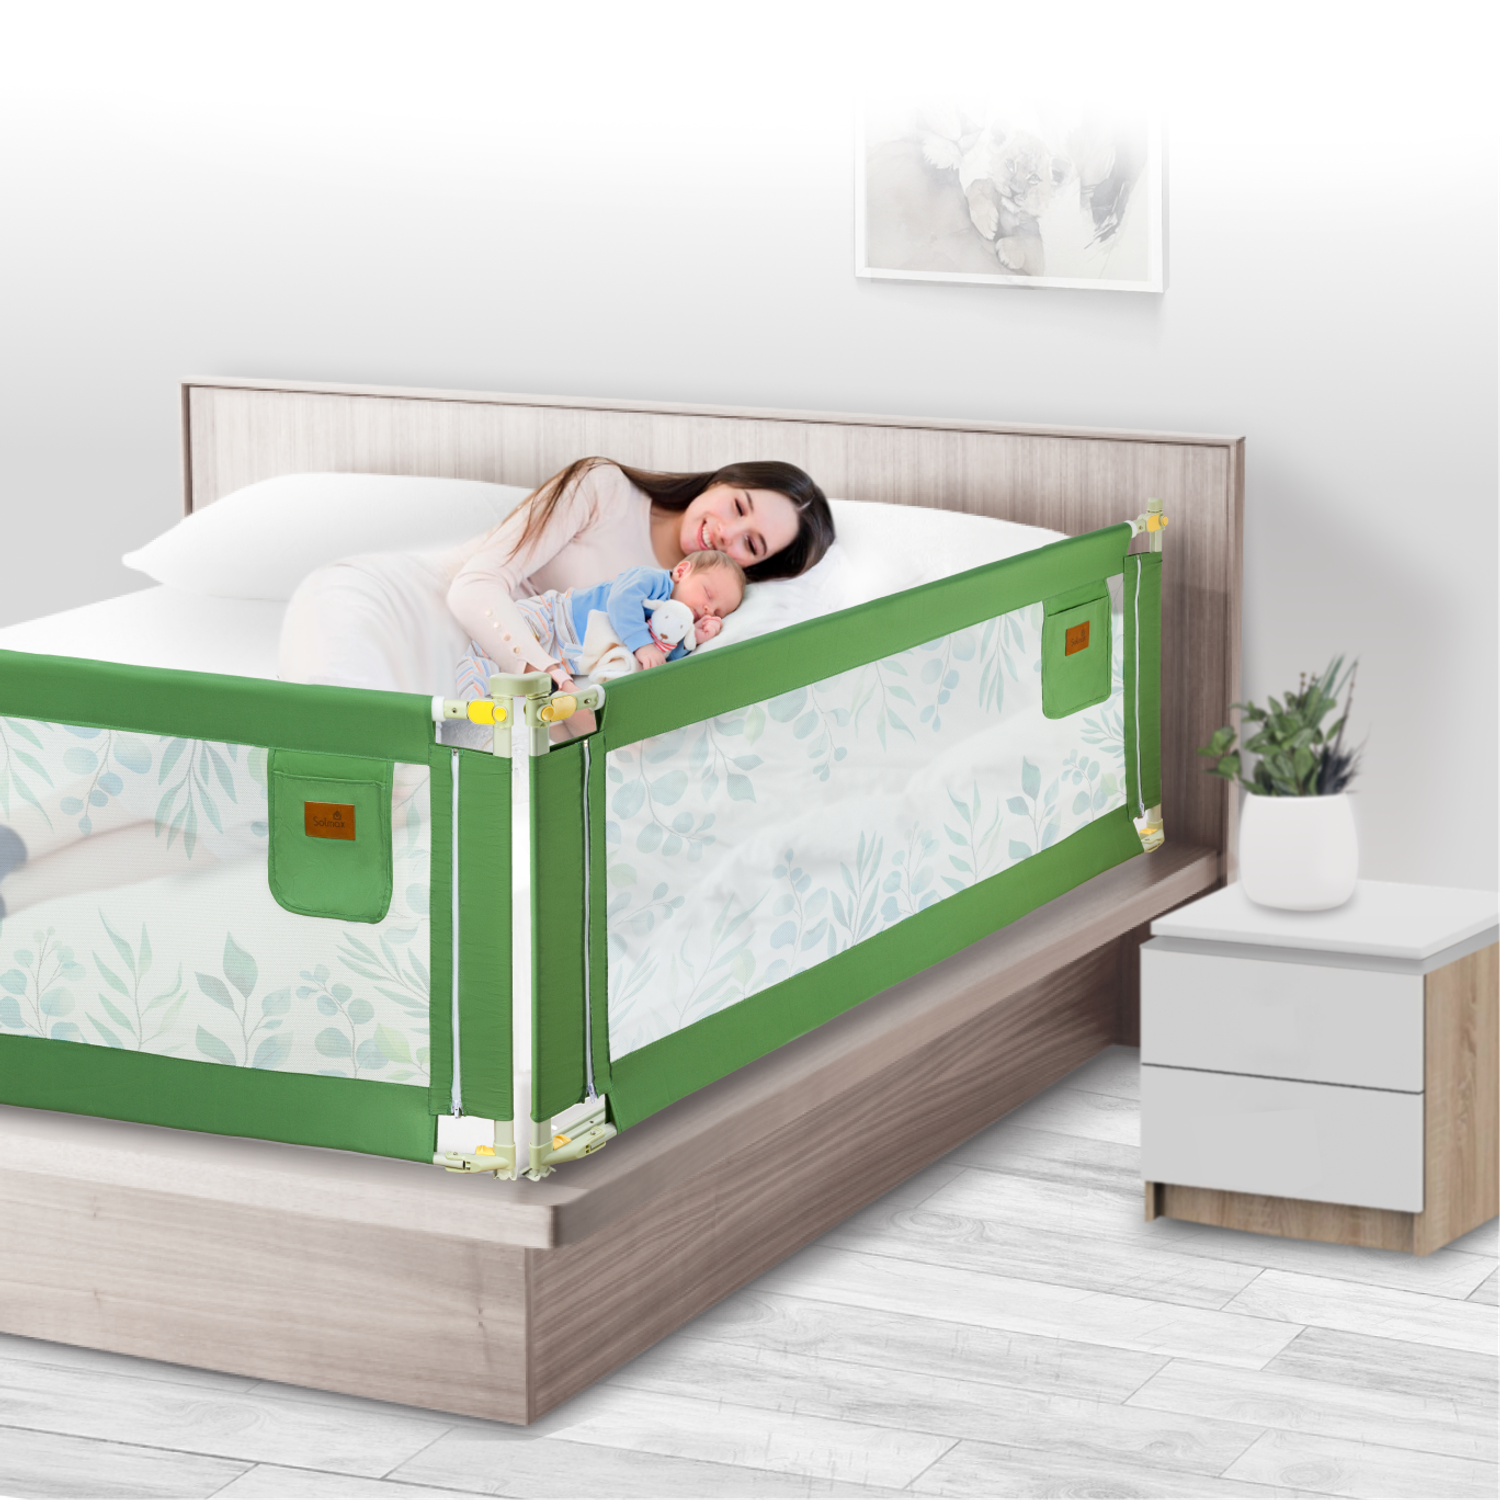 Барьер для кровати Solmax зеленый 200 см на одну сторону - фото 2